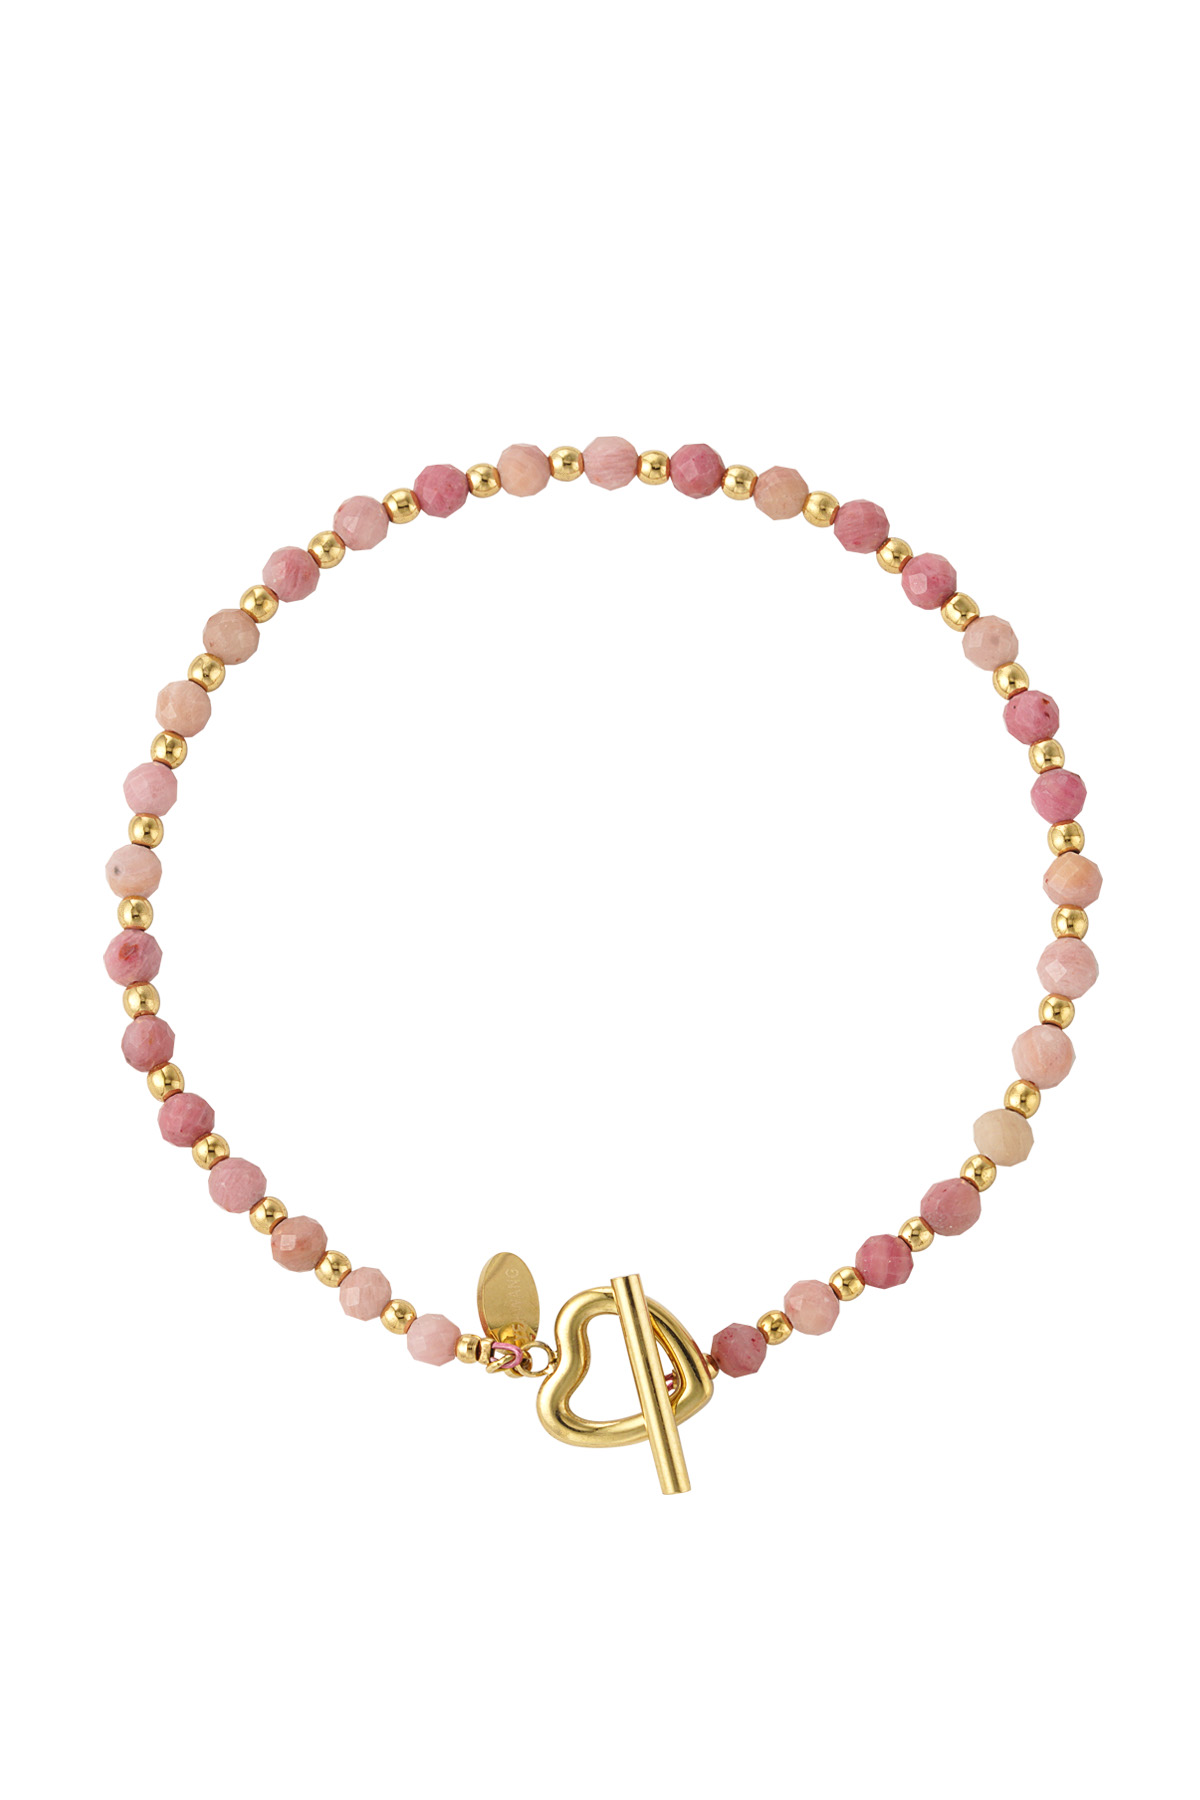 Bracelet perlé cadenas coeur - acier inoxydable rose/doré 